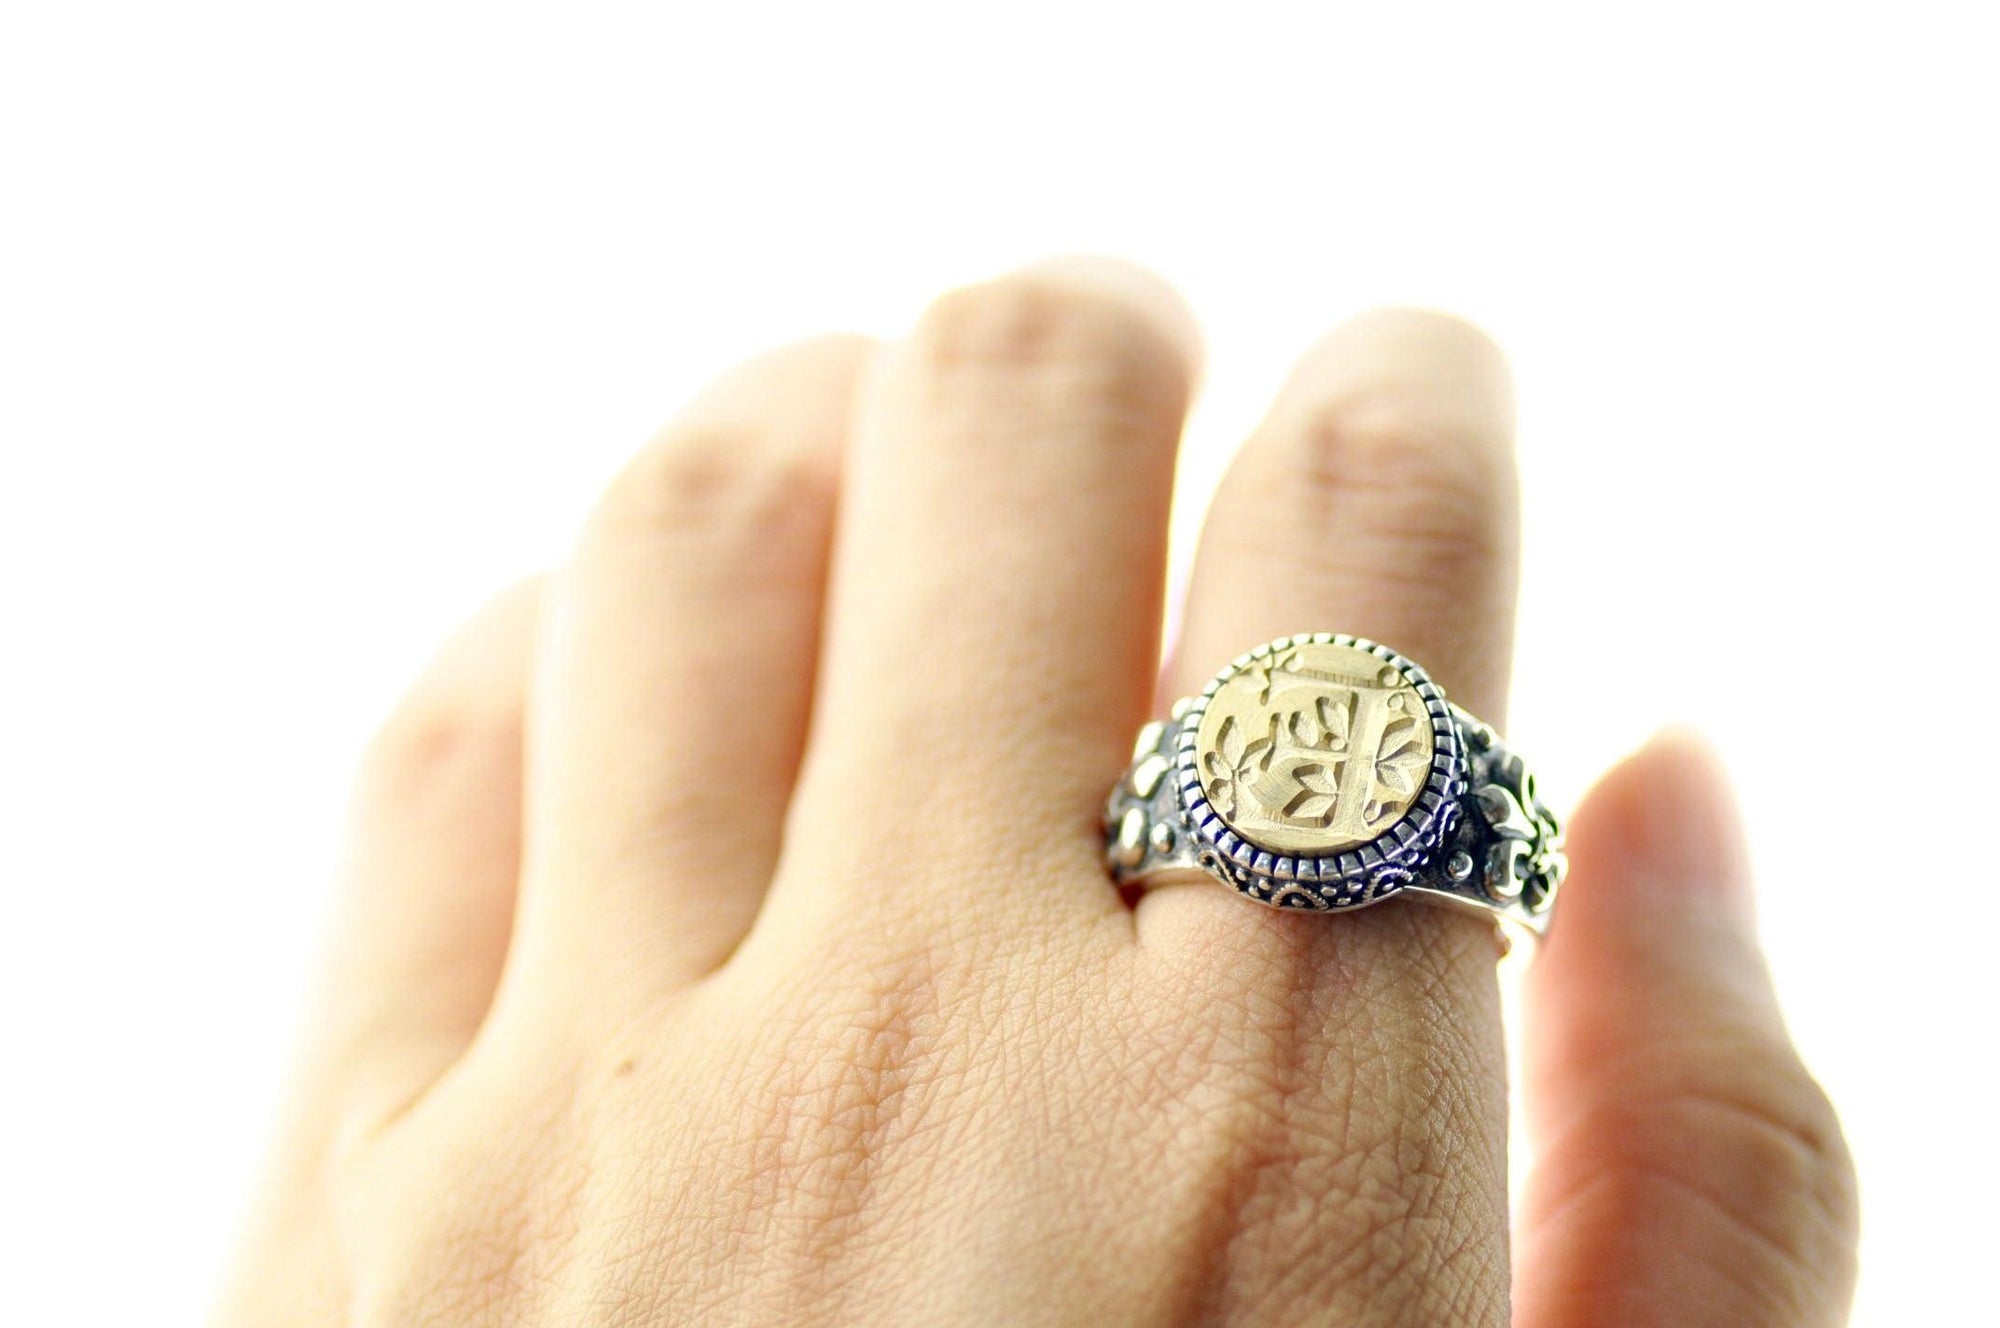 Leafy Initial Signet Ring - Backtozero B20 - 12f, 12mm, 12mm ring, 1initial, accessory, Botanical, Custom, custom ring, Fleur de Lis, him, Initial, jewelry, Leaf, Nature, One Initial, Personalized, ring, signet ring, size 10, size 11, size 8, size 9, wax seal, wax seal ring, wax seal stamp, wreath